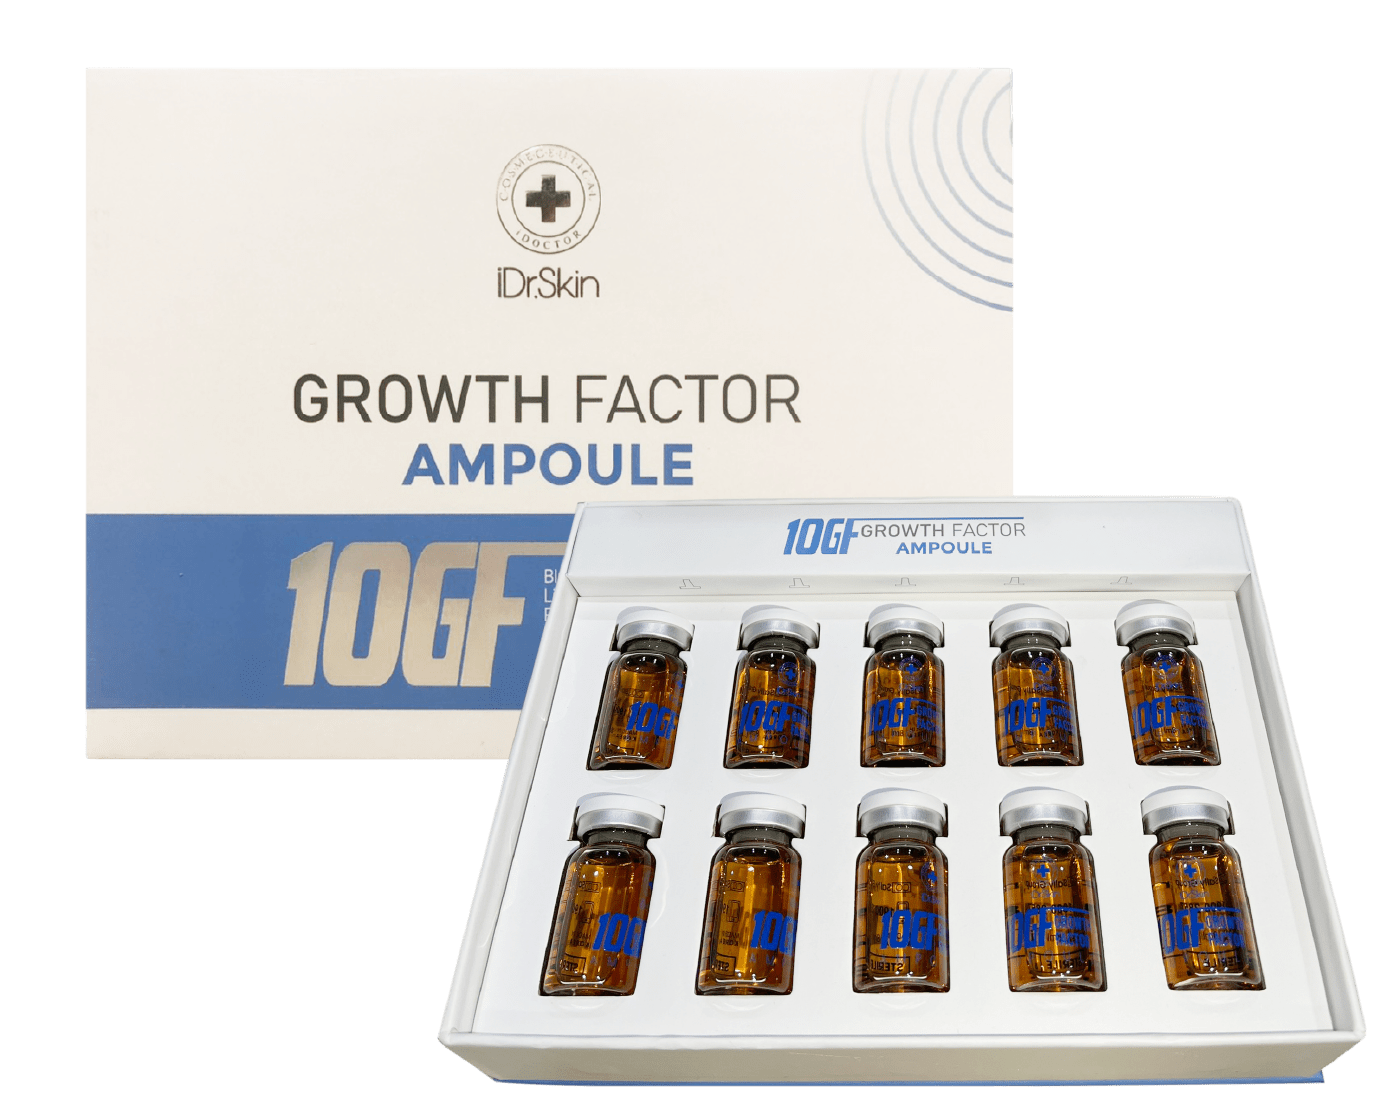 10GF Growth Factor